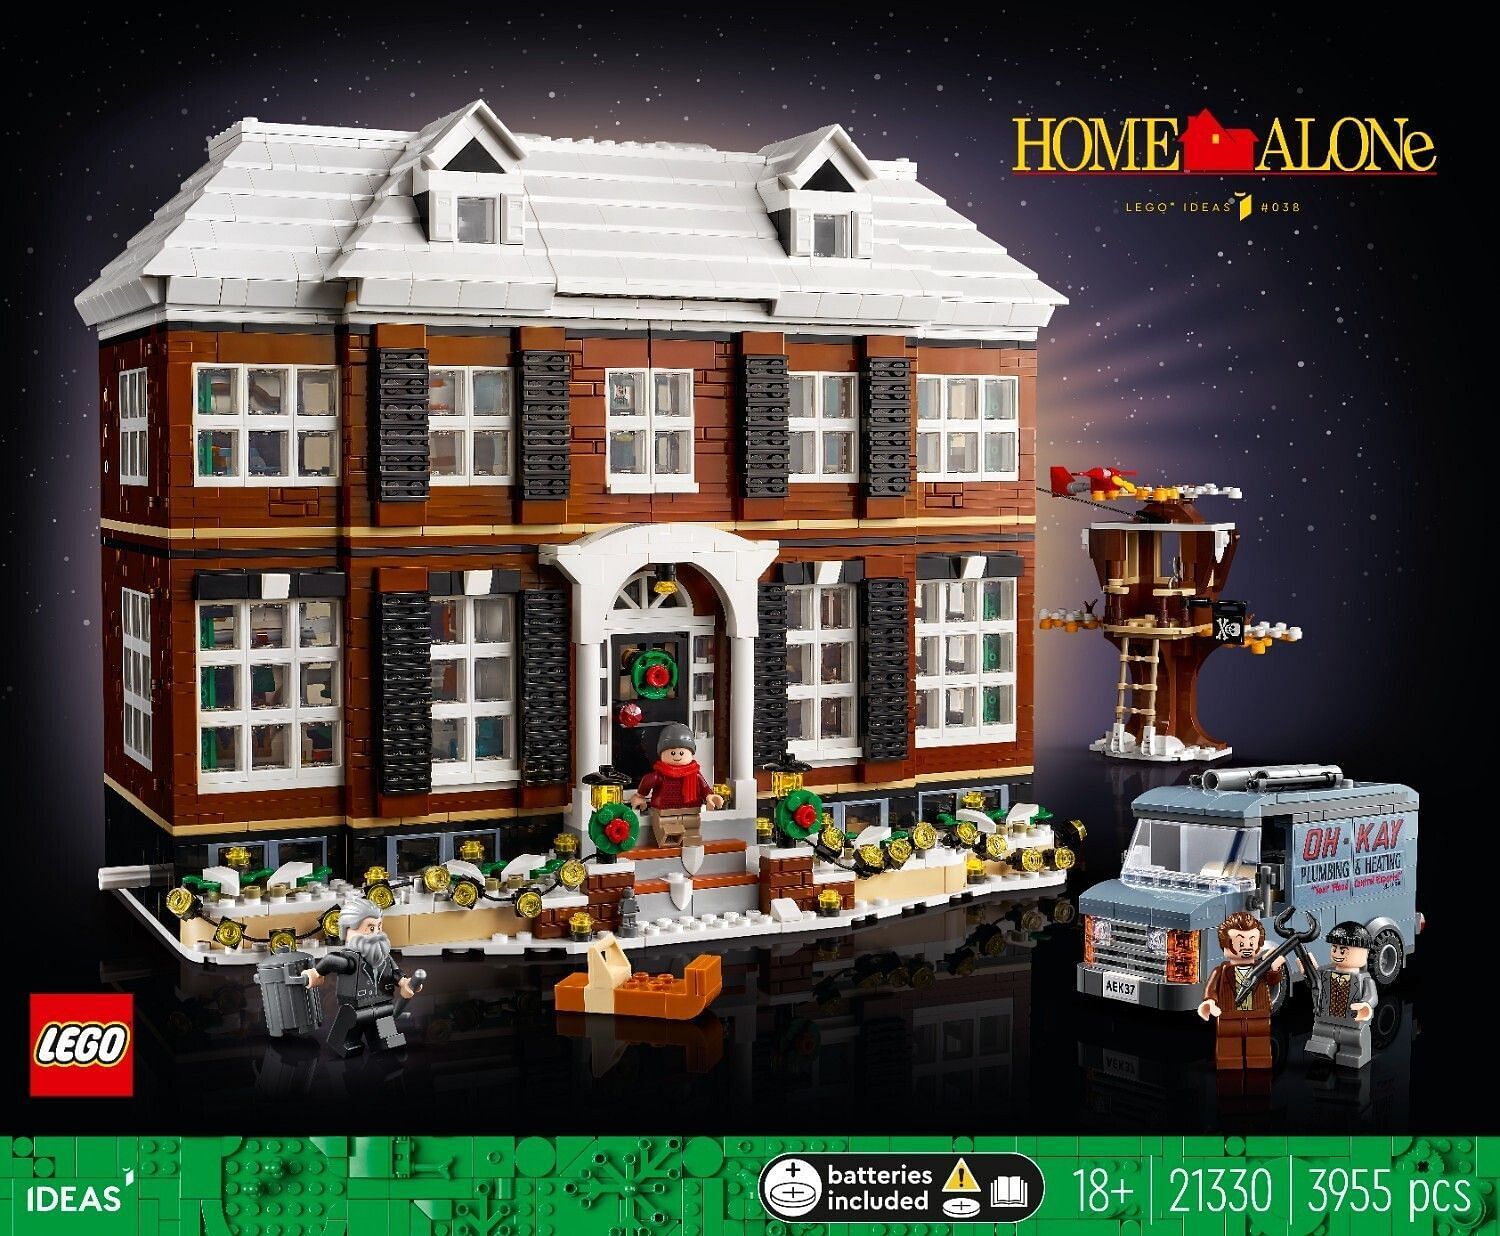 LEGO Ideas Home Alone (Image via The LEGO Group)